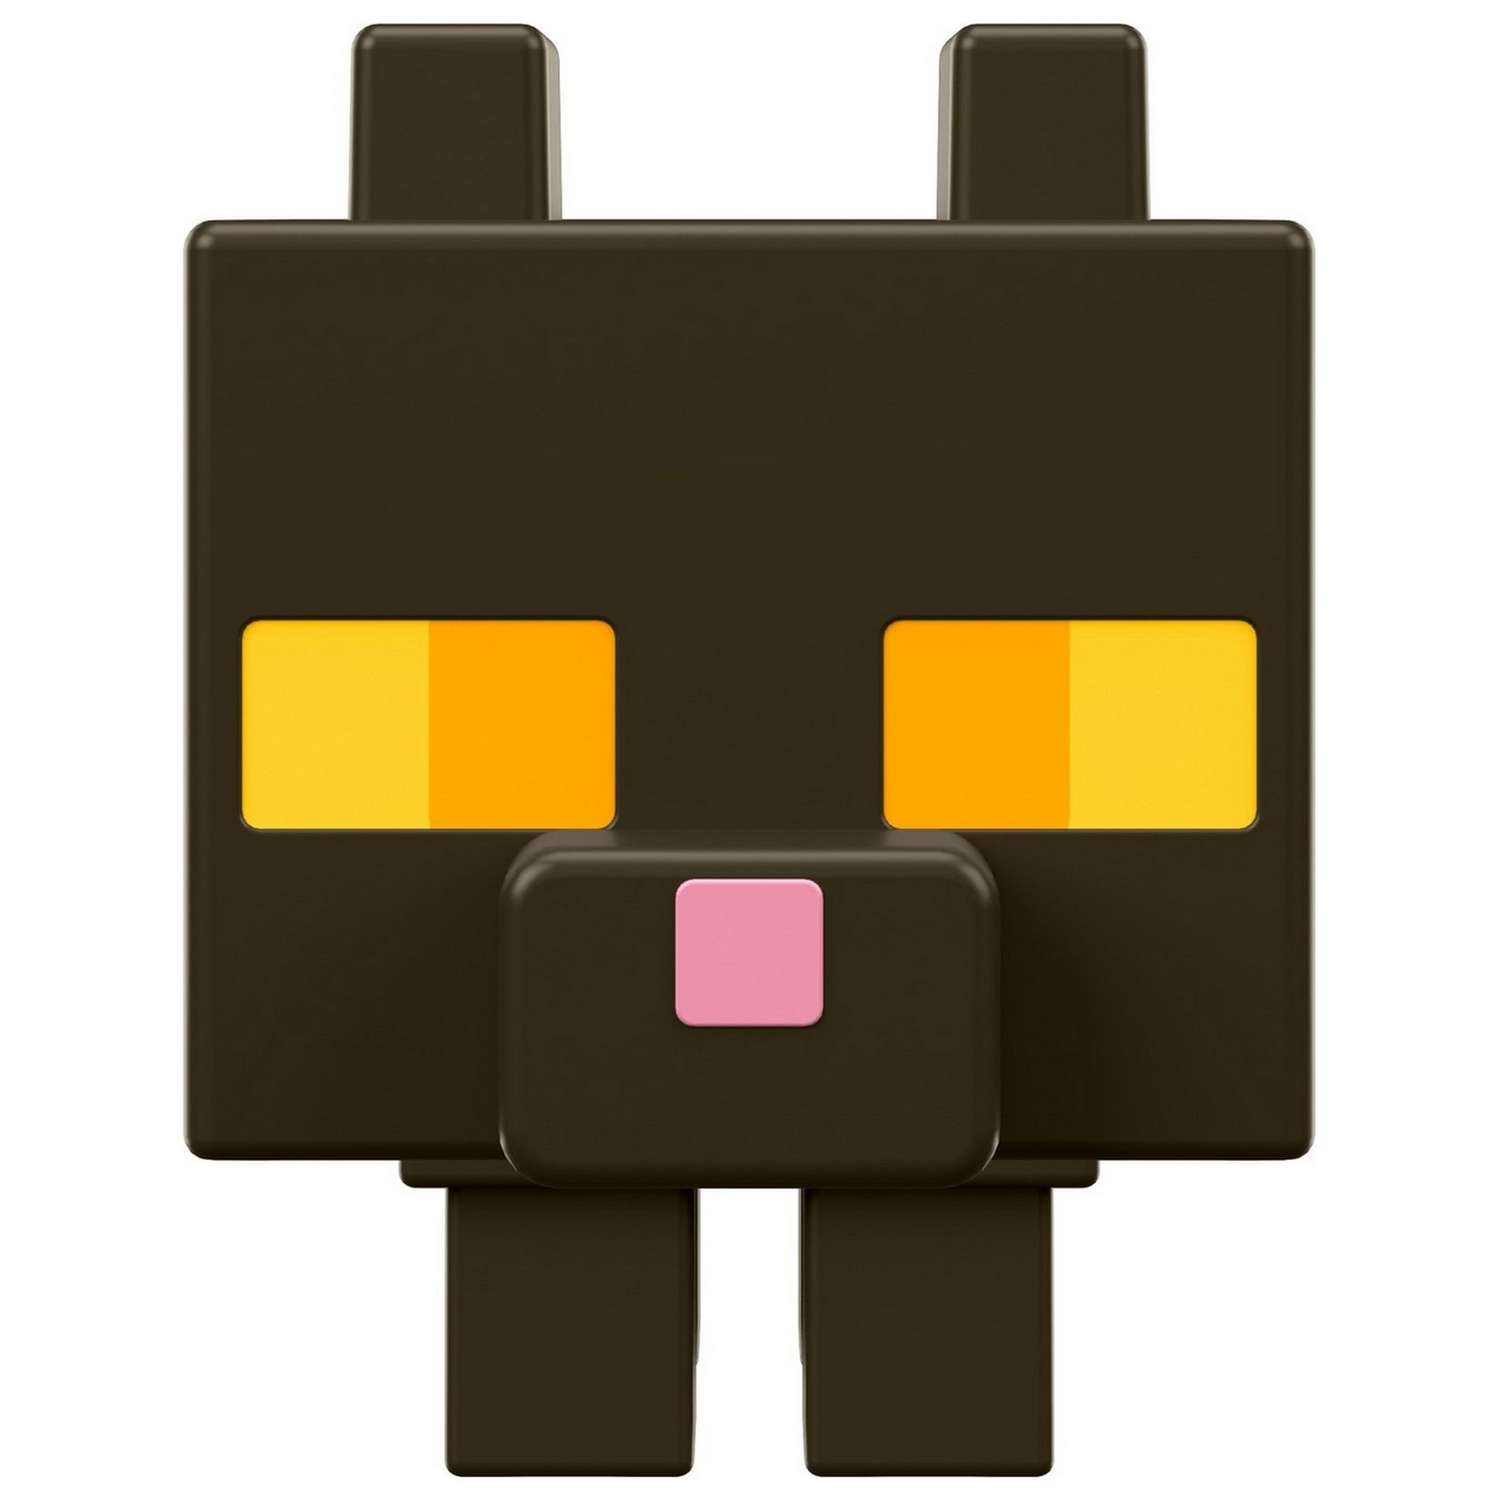 Мини-фигурка Minecraft Герои игры Кошка HDV80 - фото 3